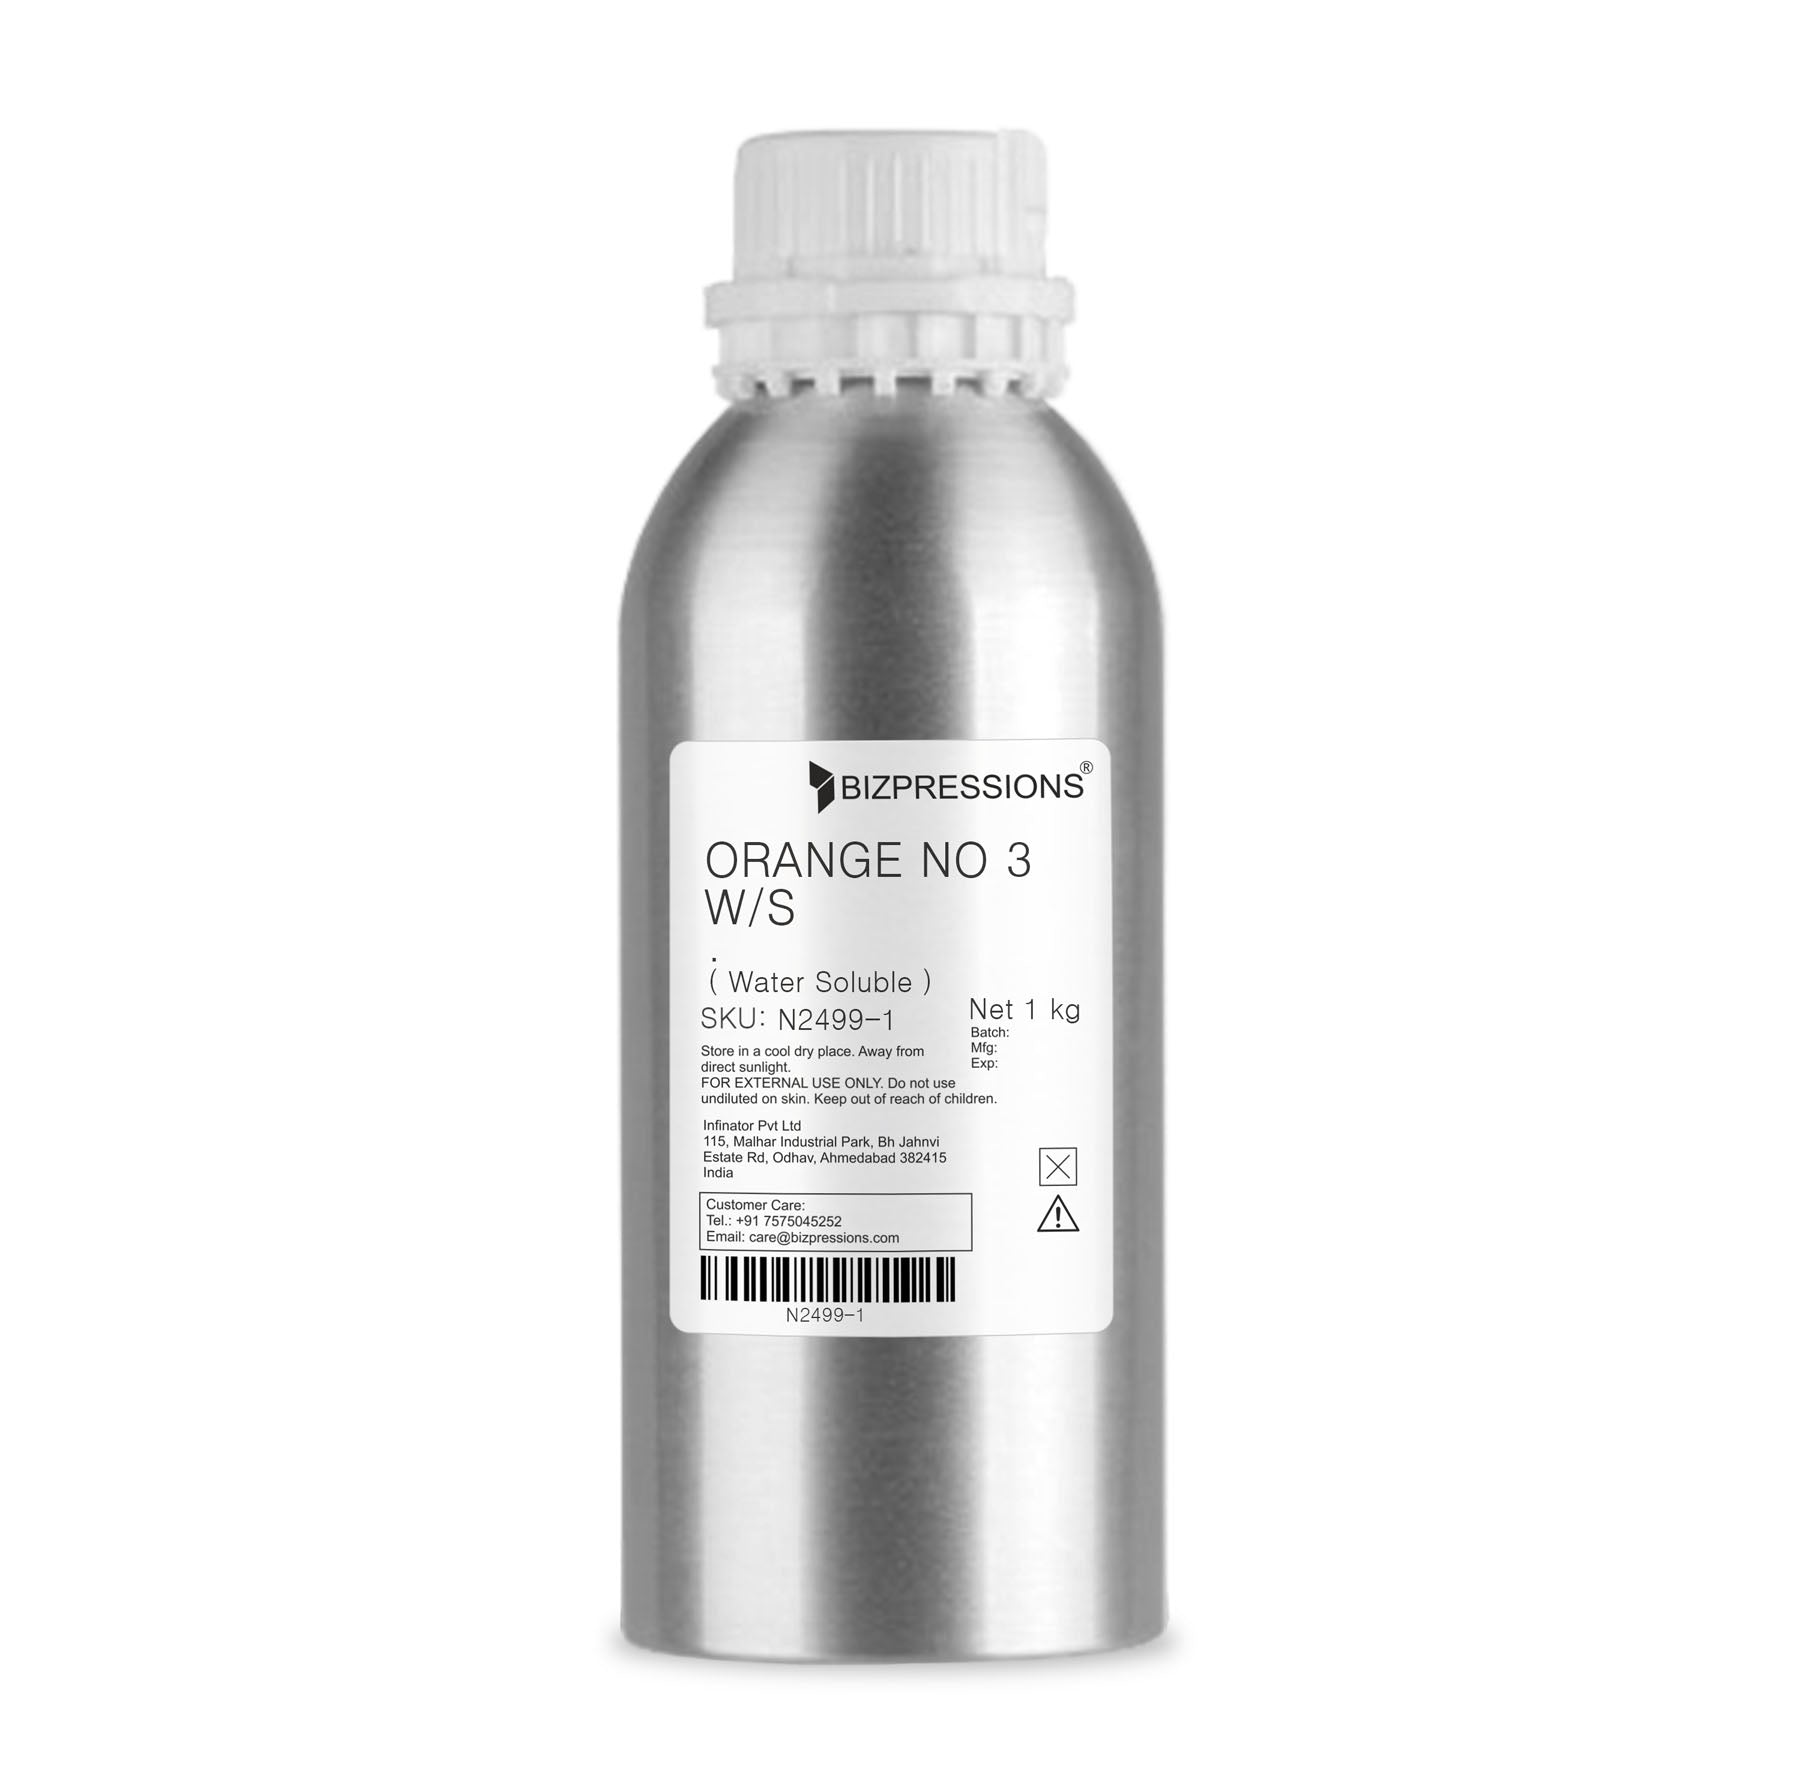 ORANGE NO 3 W/S - Fragrance ( Water Soluble ) - 1 kg